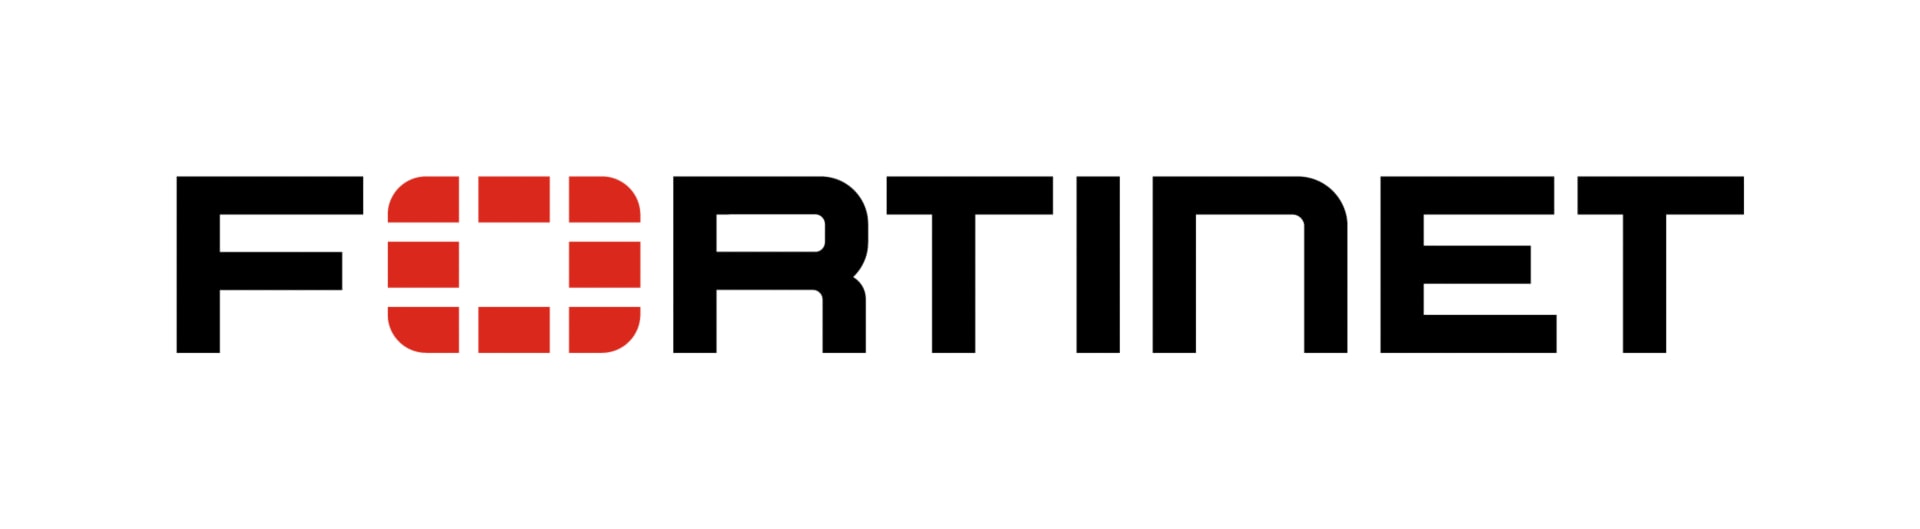 FortiGuard UTM Bundle - Subscription License (1 Year) + FortiCare 24x7 - 1